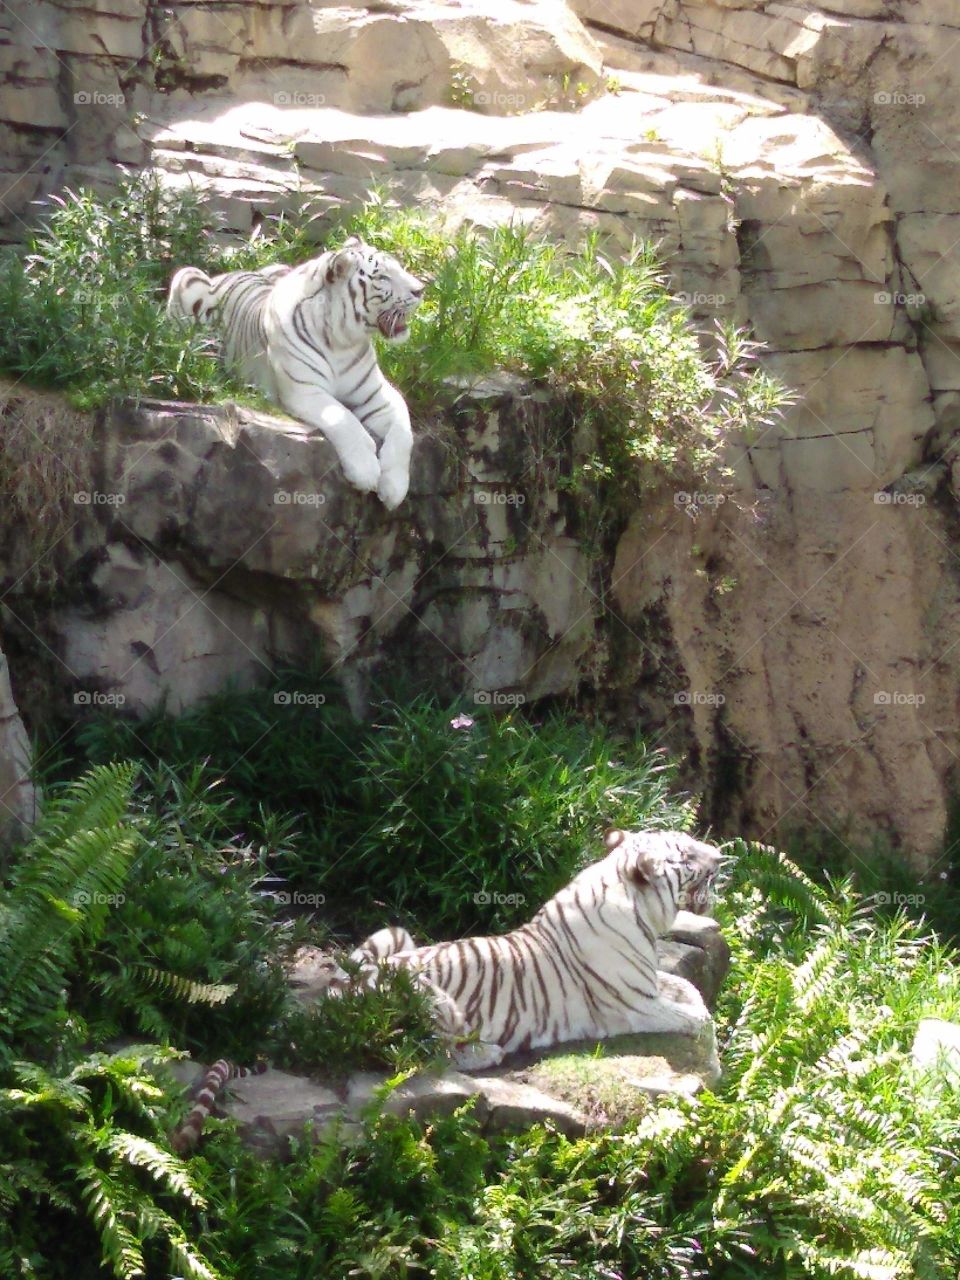 Majestic White Tigers